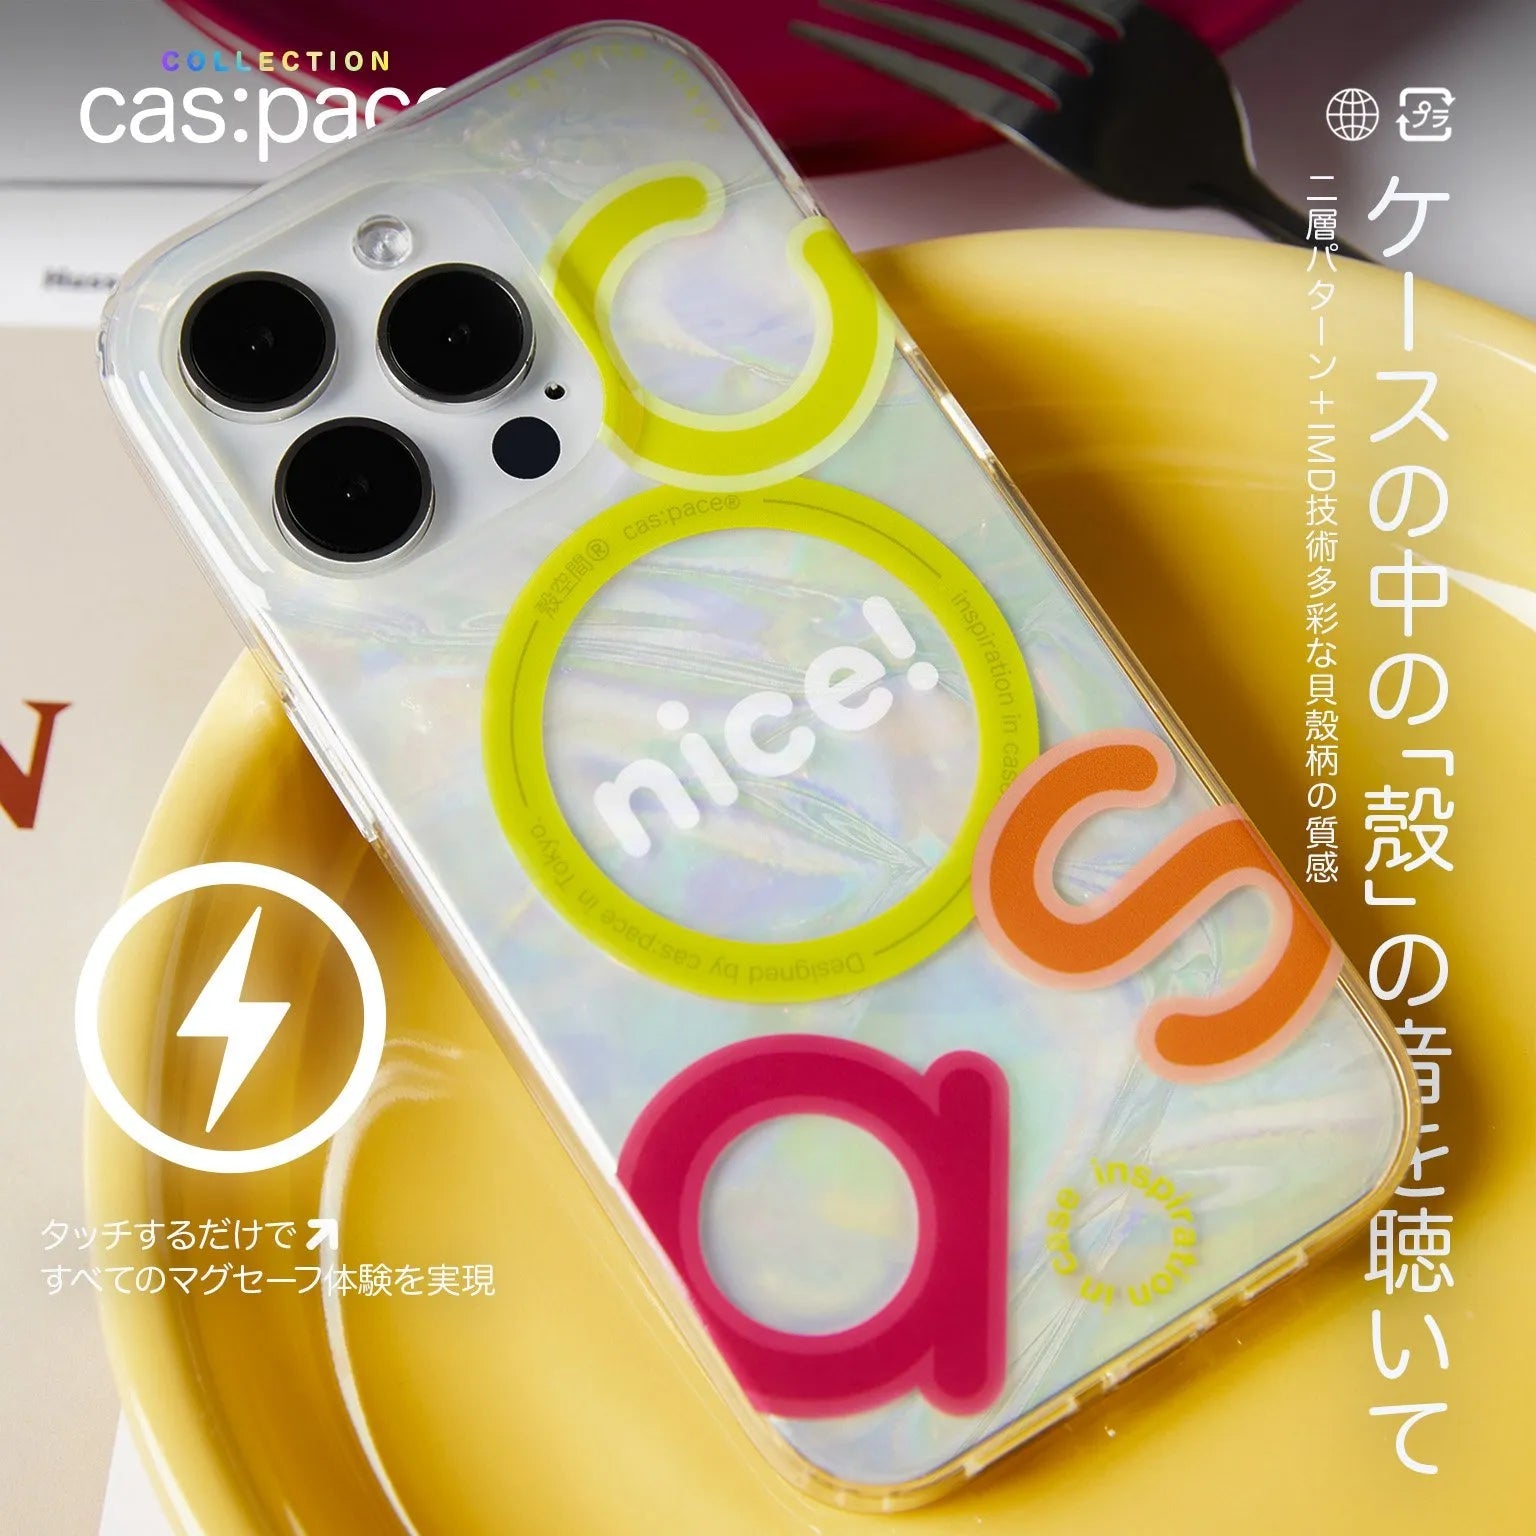 cas:pace collection Magsafe対応「cas」携帯ケース - cas:pace 殼空間